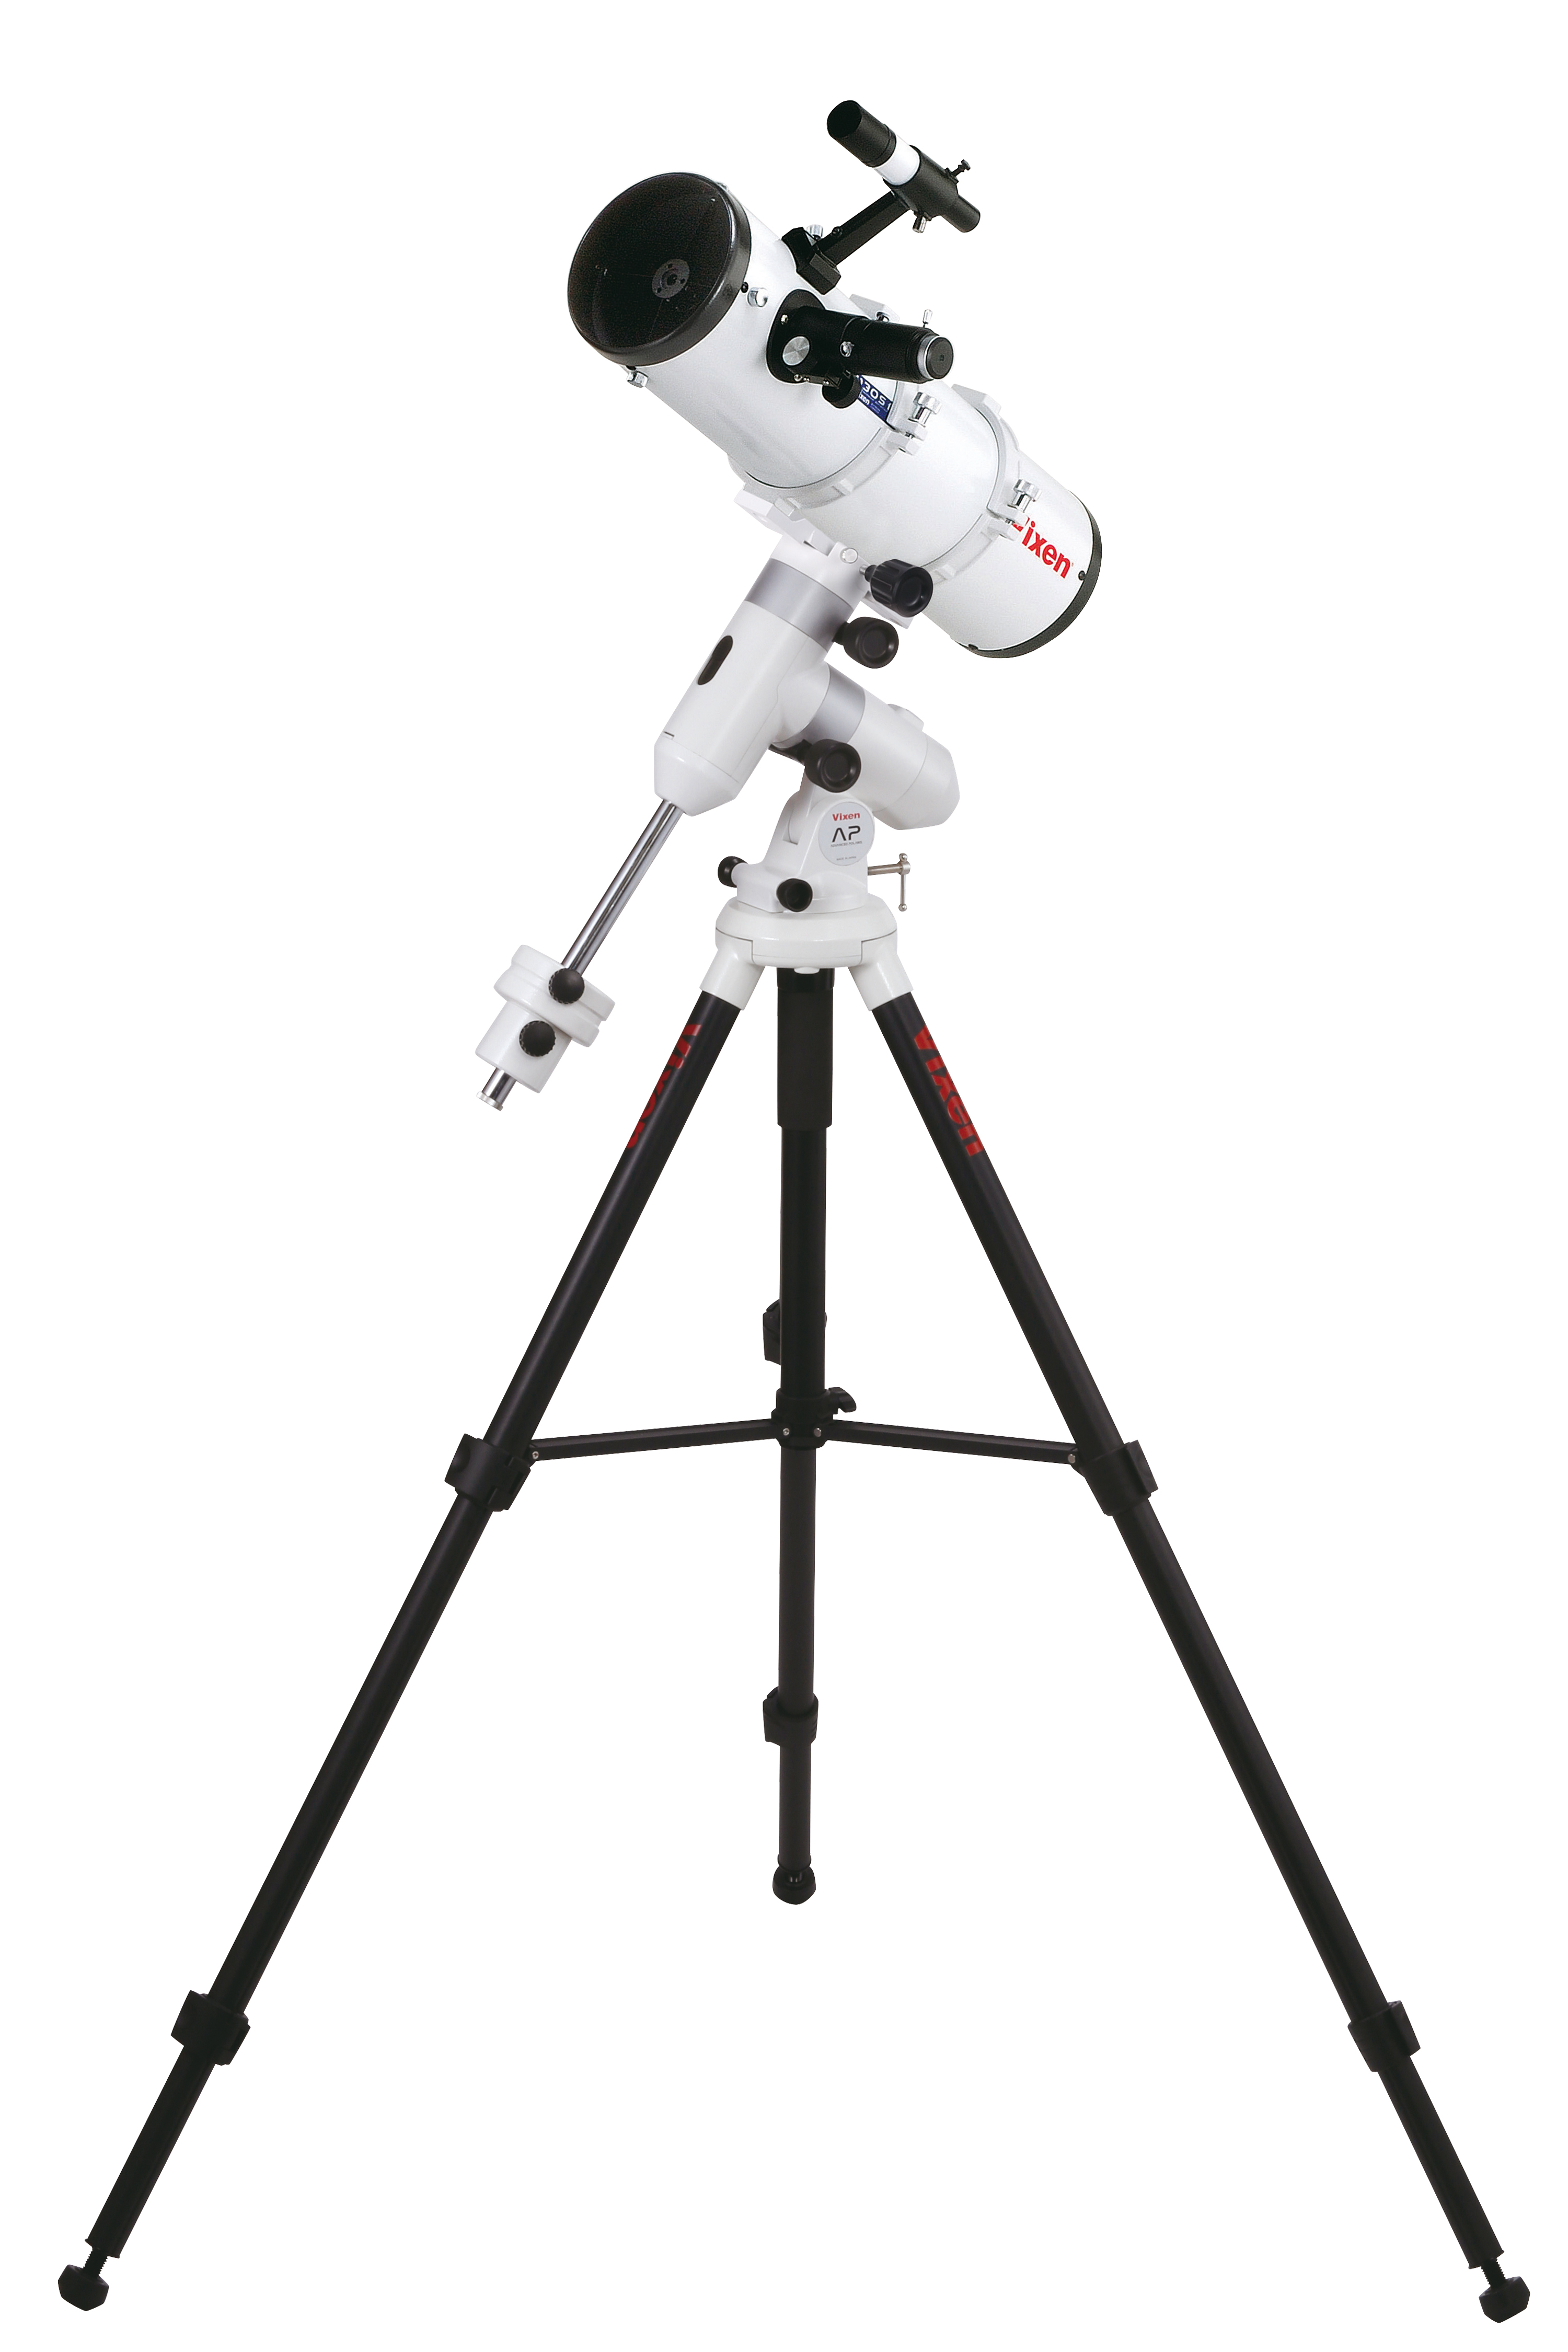 AP-R130Sf telescope set